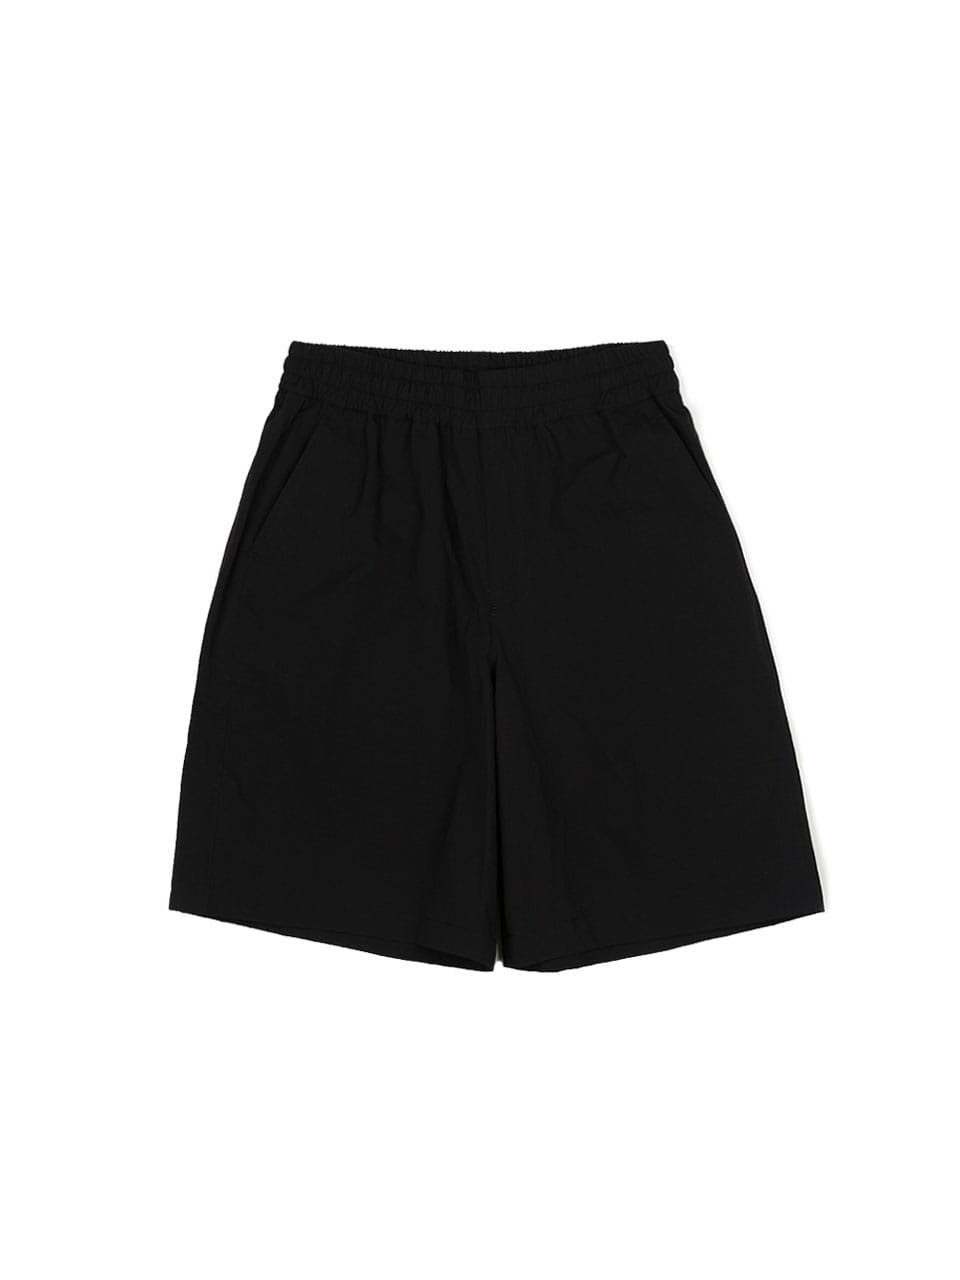 Bermuda shorts black